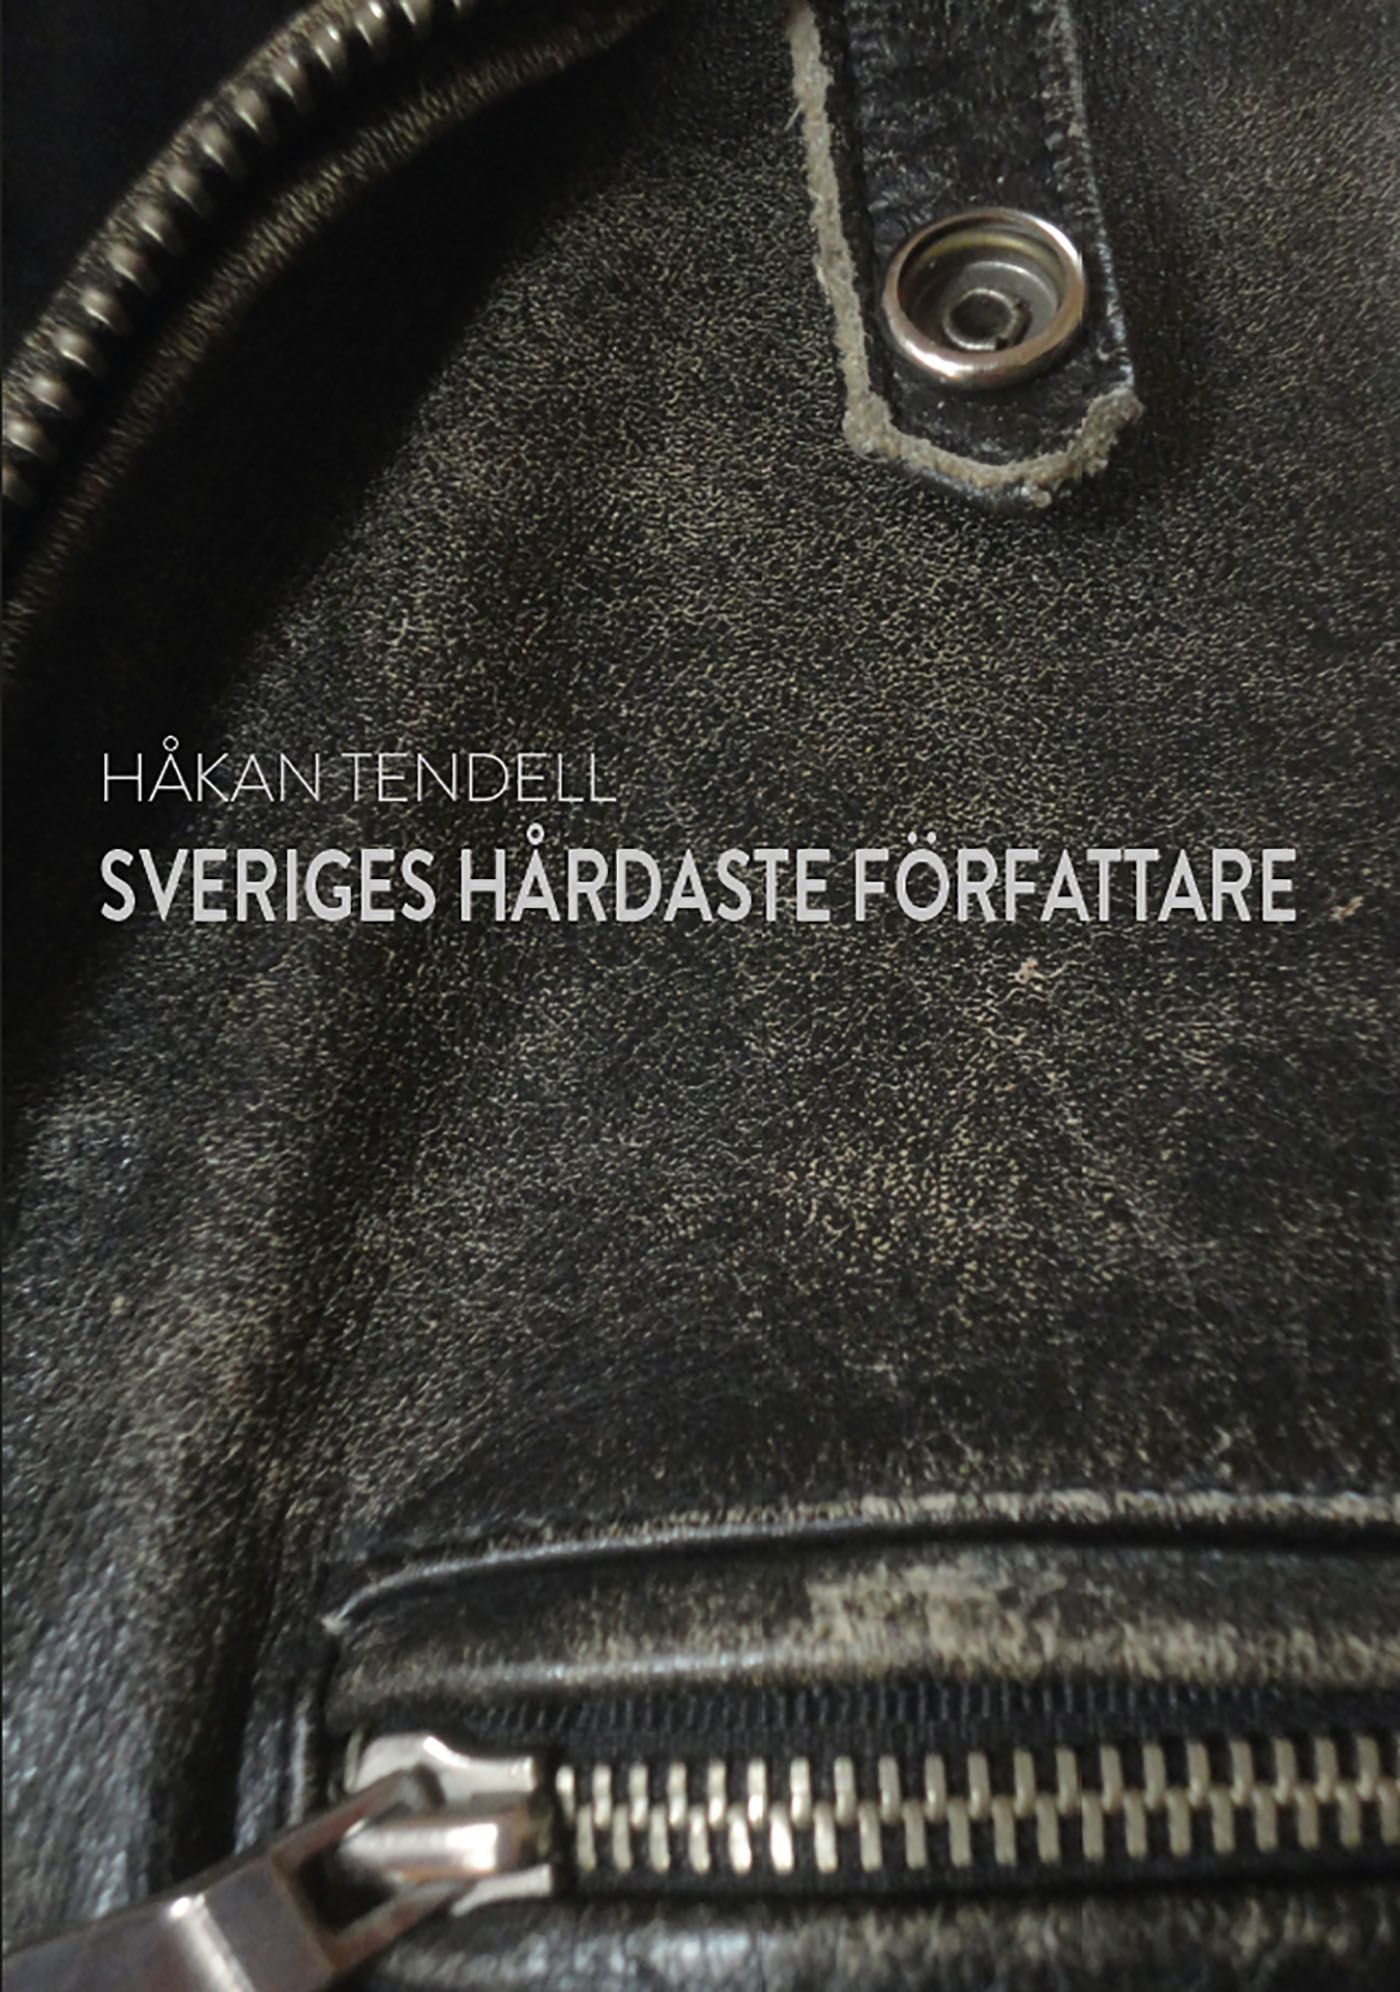 Sveriges hårdaste författare, e-bog af Håkan Tendell